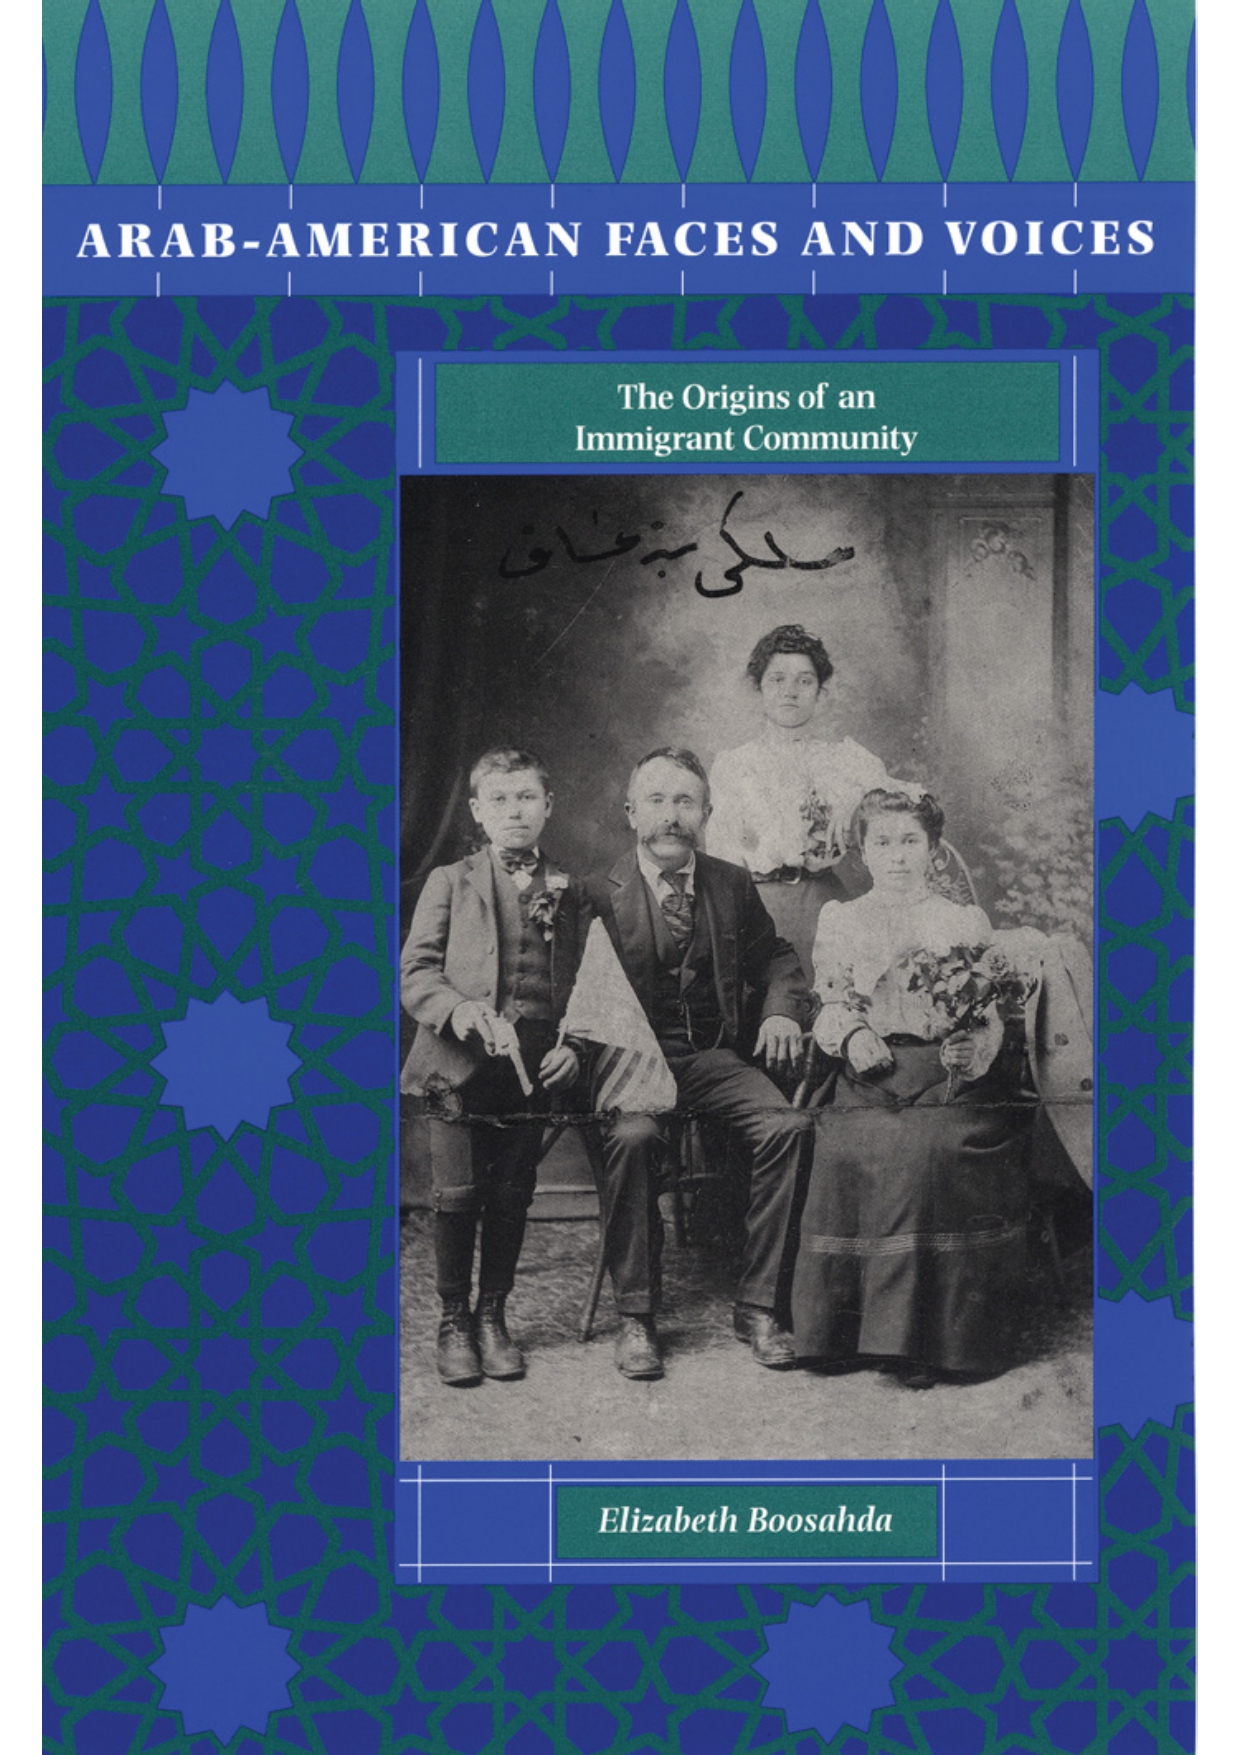 Elizabeth Boosahda, Arab-American Faces and Voices: The Origins of an Immigrant Community, Austin: University of Texas Press, 2003.